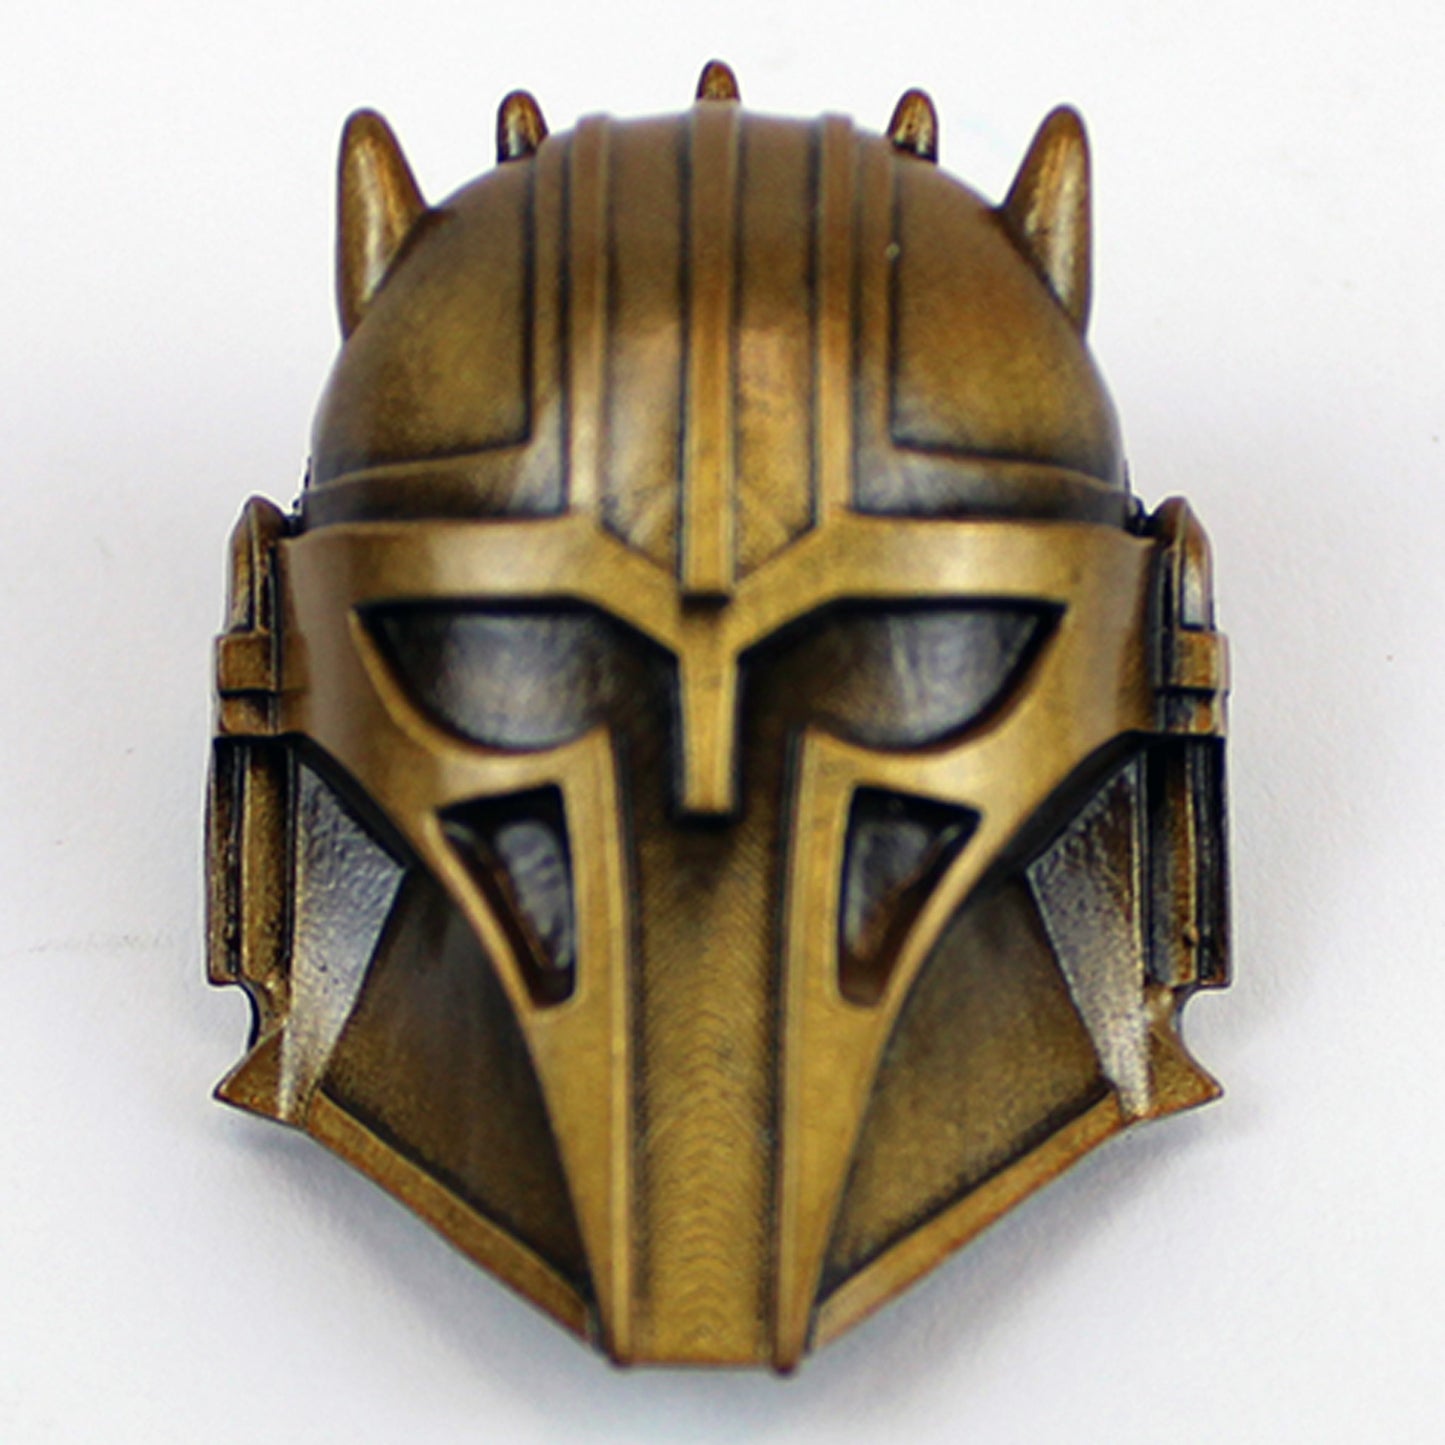 The Mandalorian 3D Helmet Star Wars Pin Set